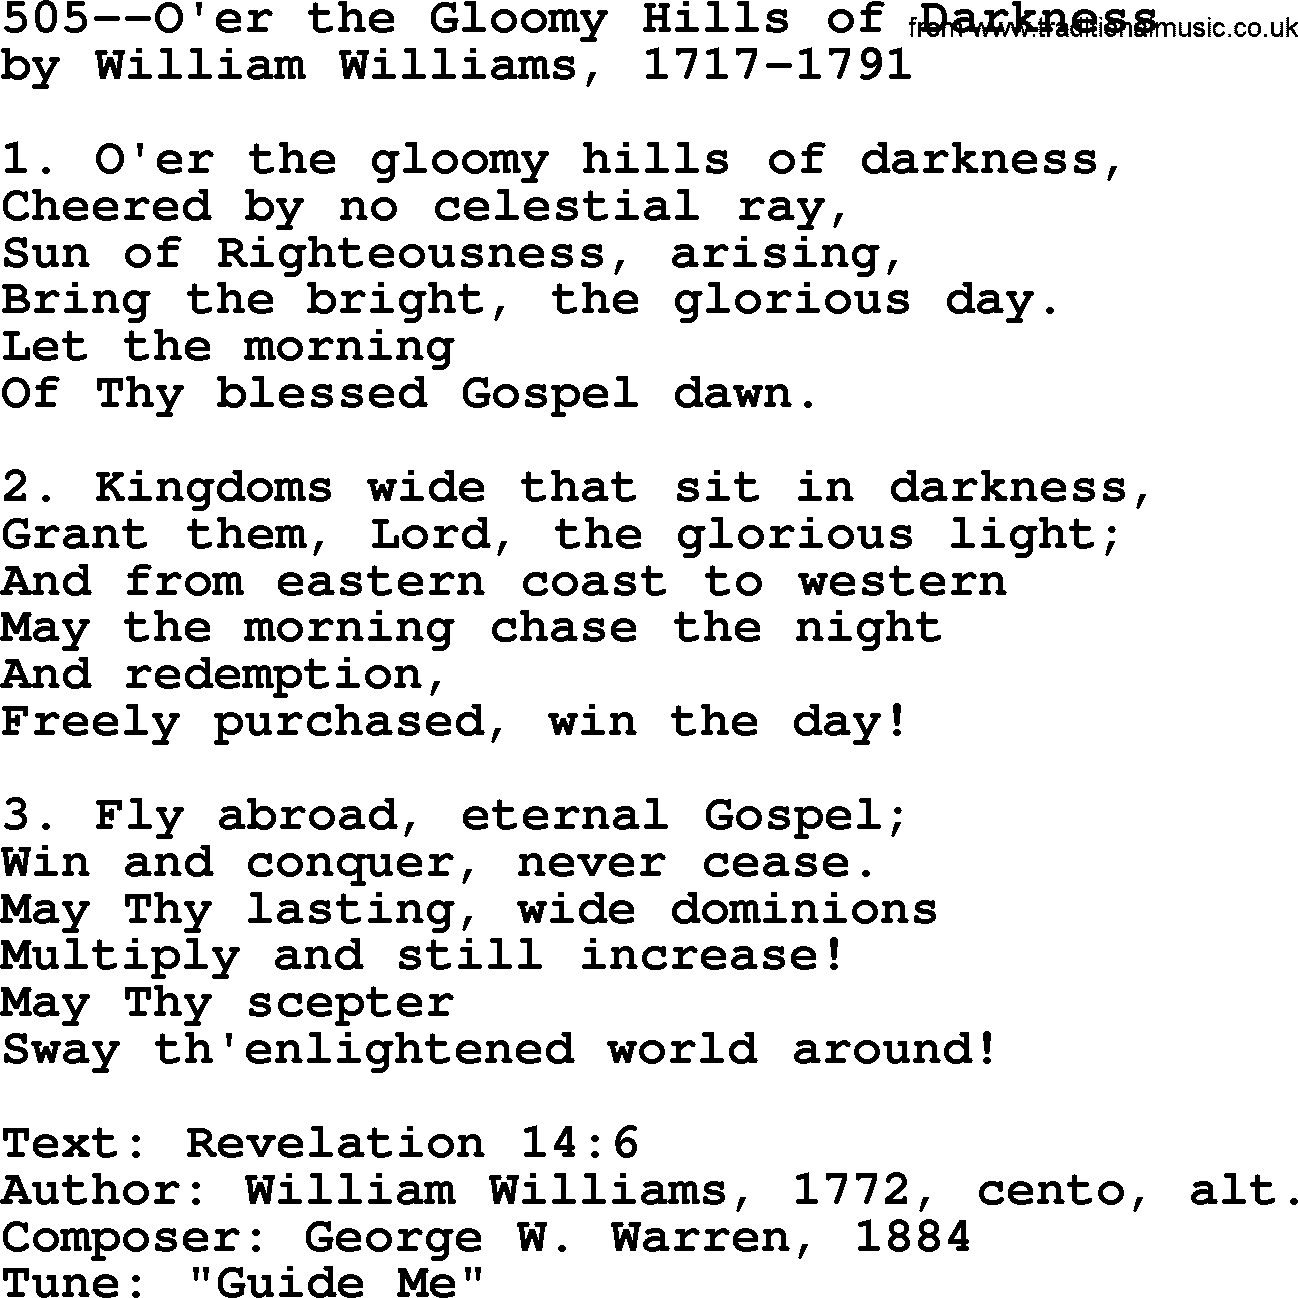 Lutheran Hymn: 505--O'er the Gloomy Hills of Darkness.txt lyrics with PDF